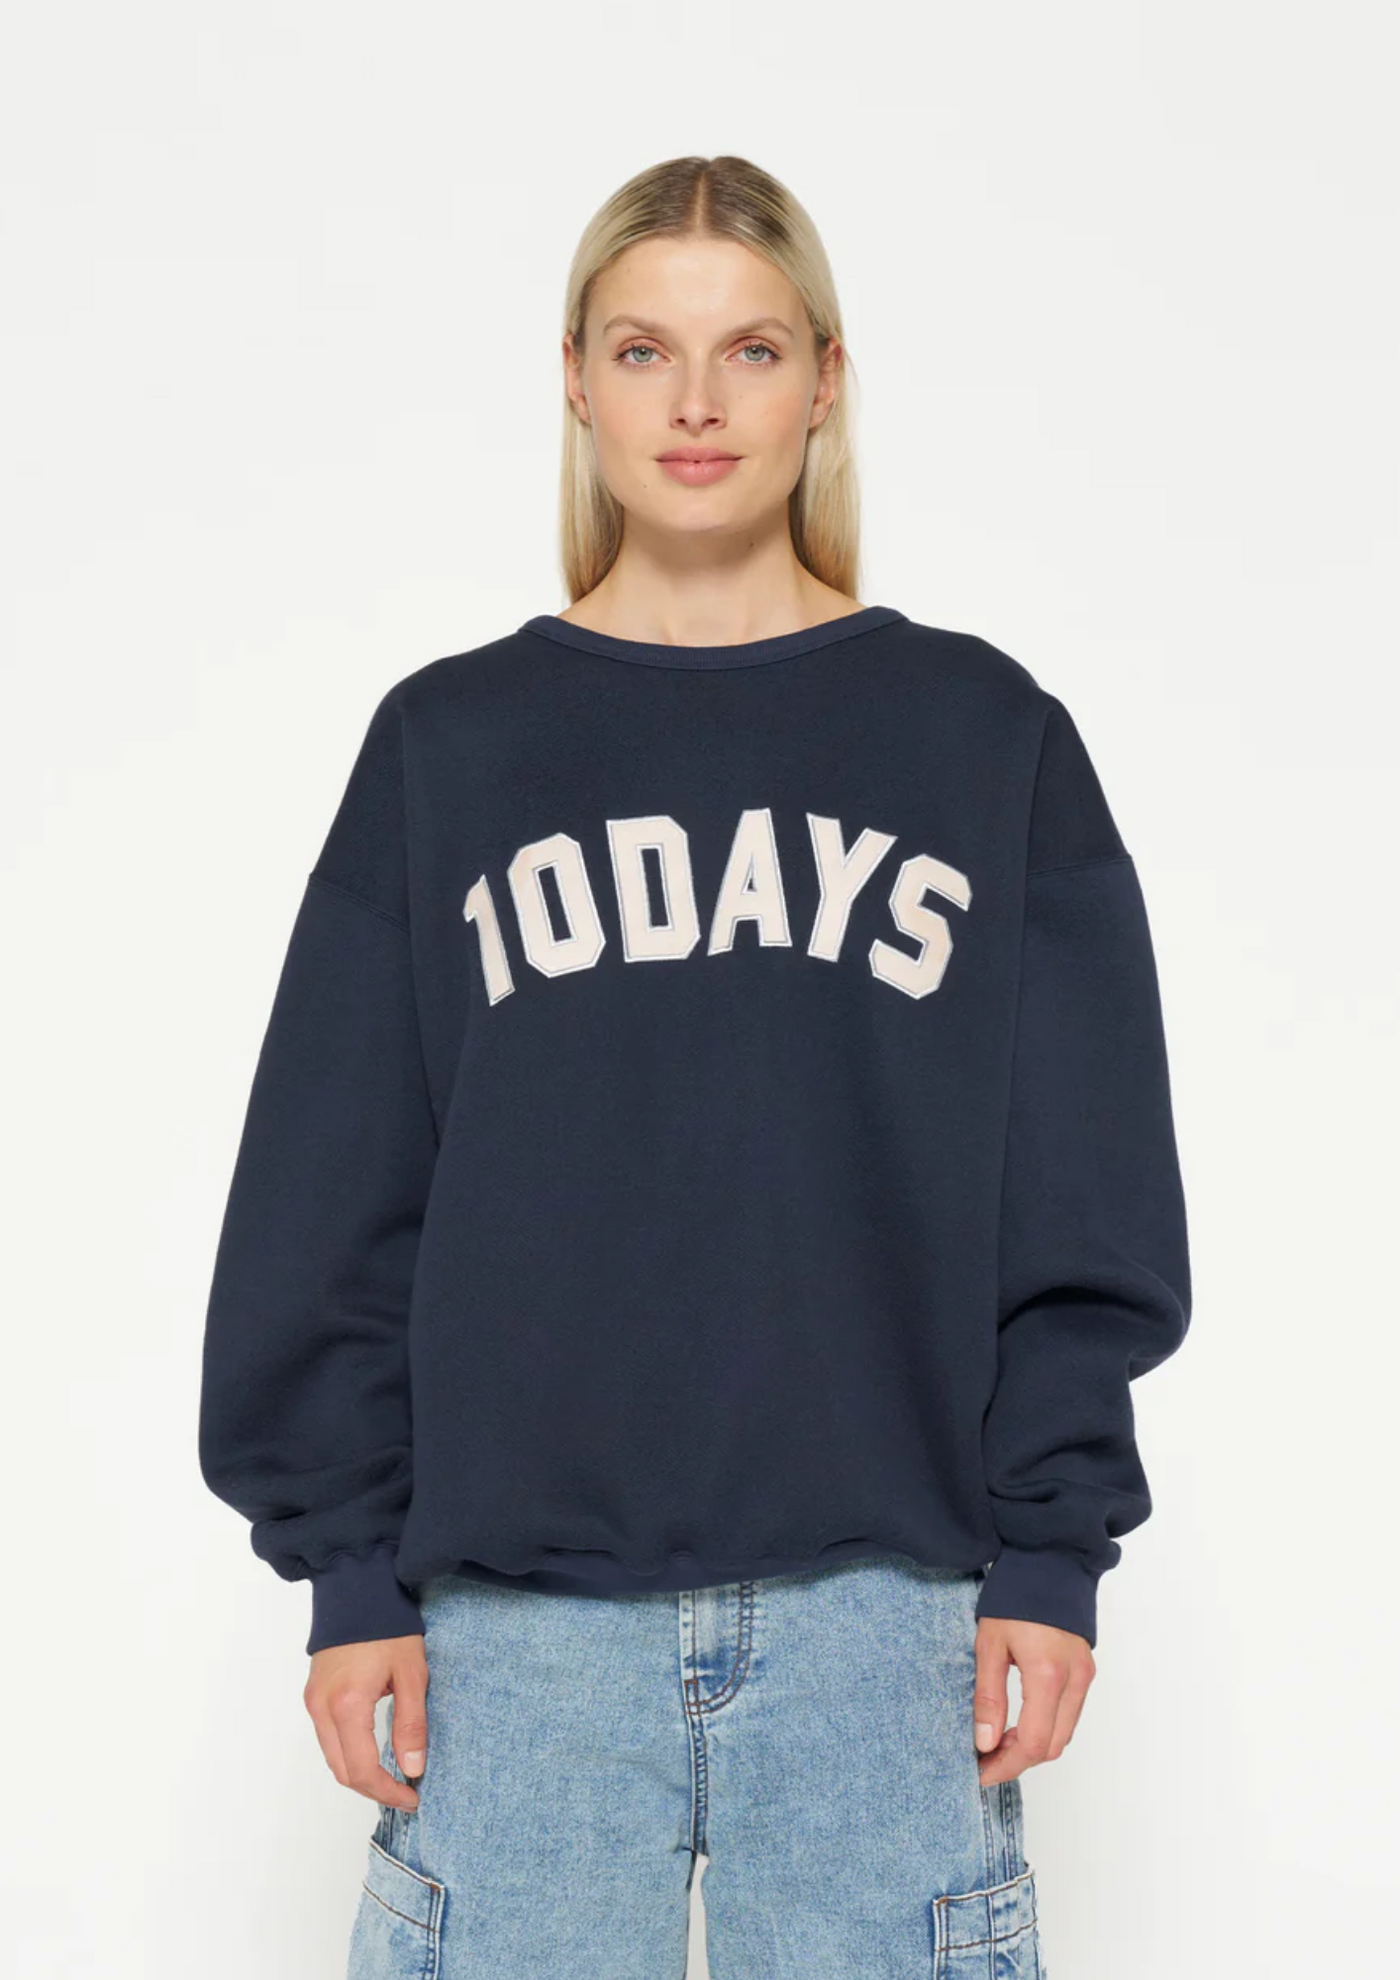 10 Days | Statement Sweater Black